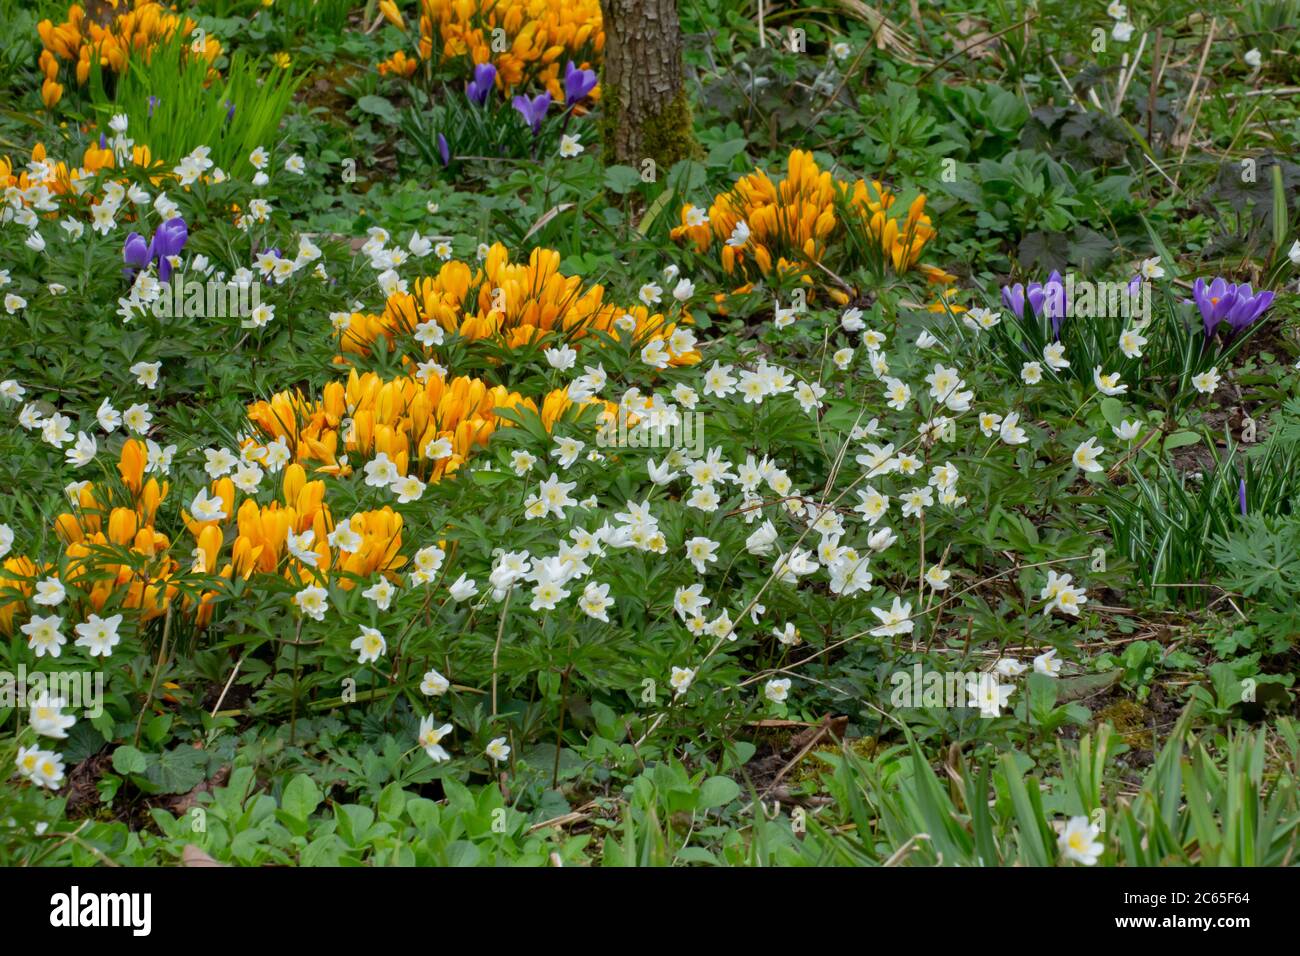 Colorful flowerbed with white wood anemones and Yellow and purple saffron crocus, Anemone nemorosa and Crocus vernus Stock Photo